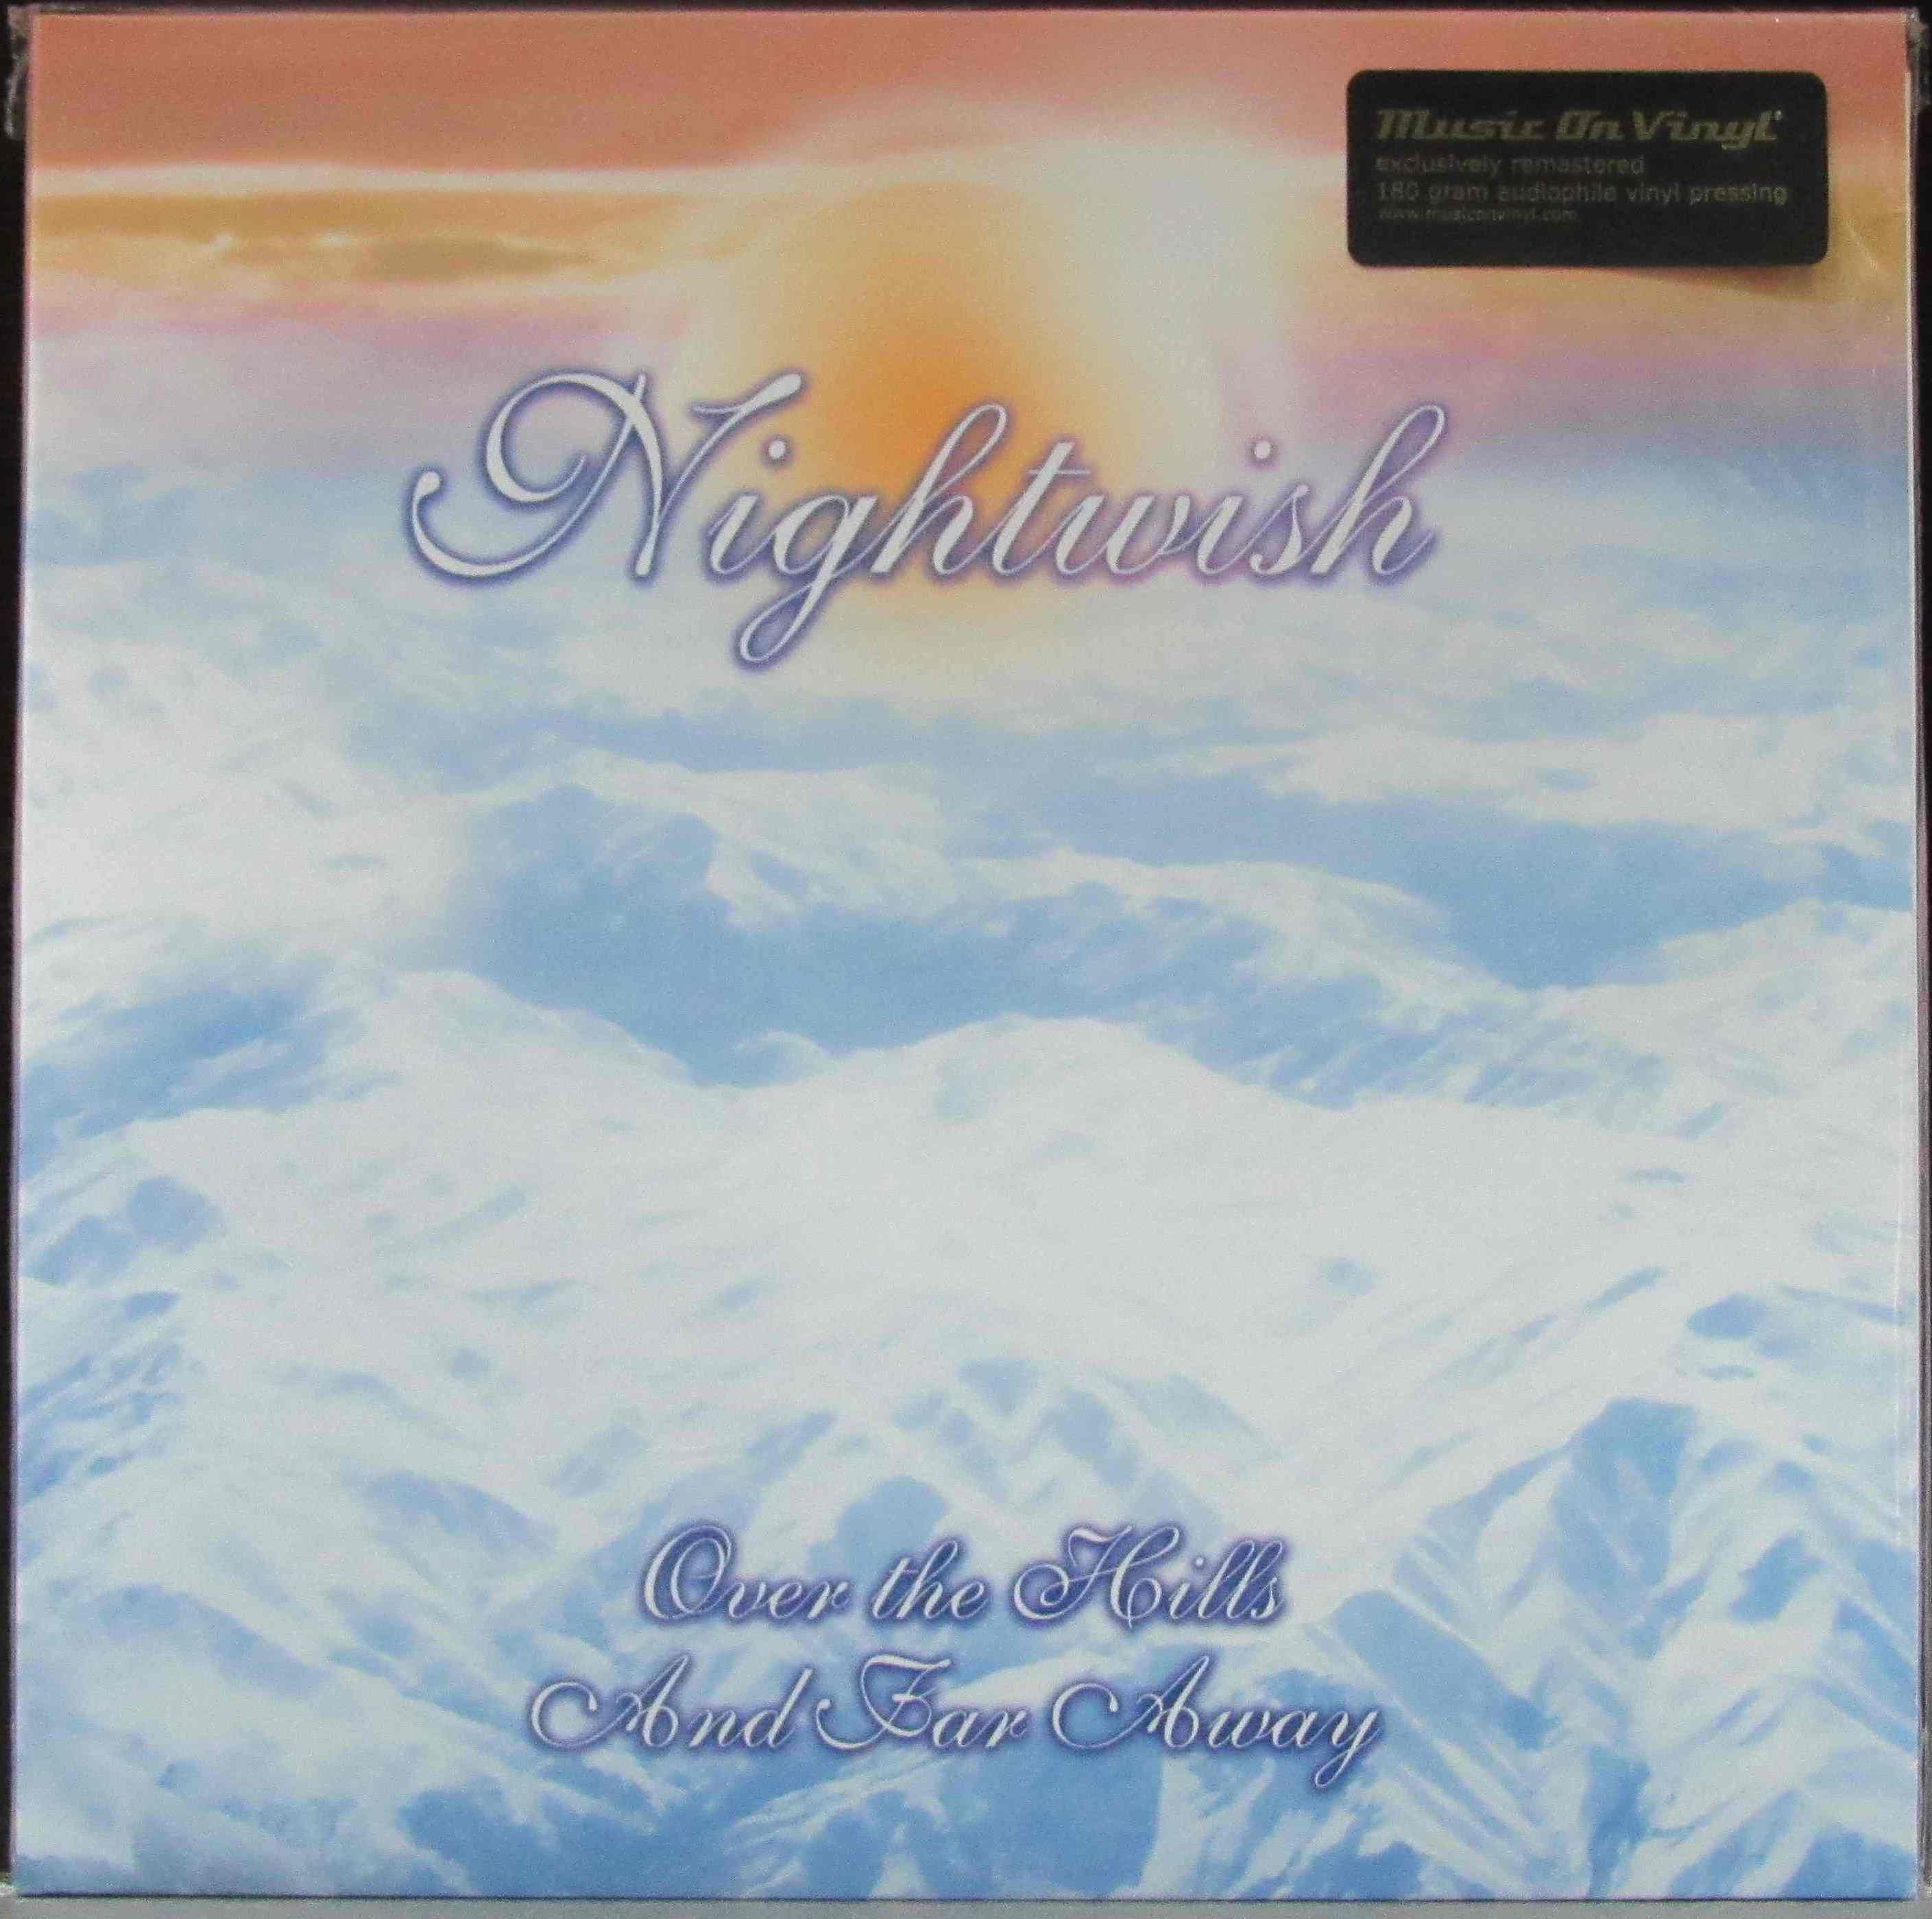 Hills and far away. Nightwish - over the Hills and far away (2001). Nightwish over the Hills and far away обложка. Over the Hills and far away (альбом). Nightwish обложка альбома away.